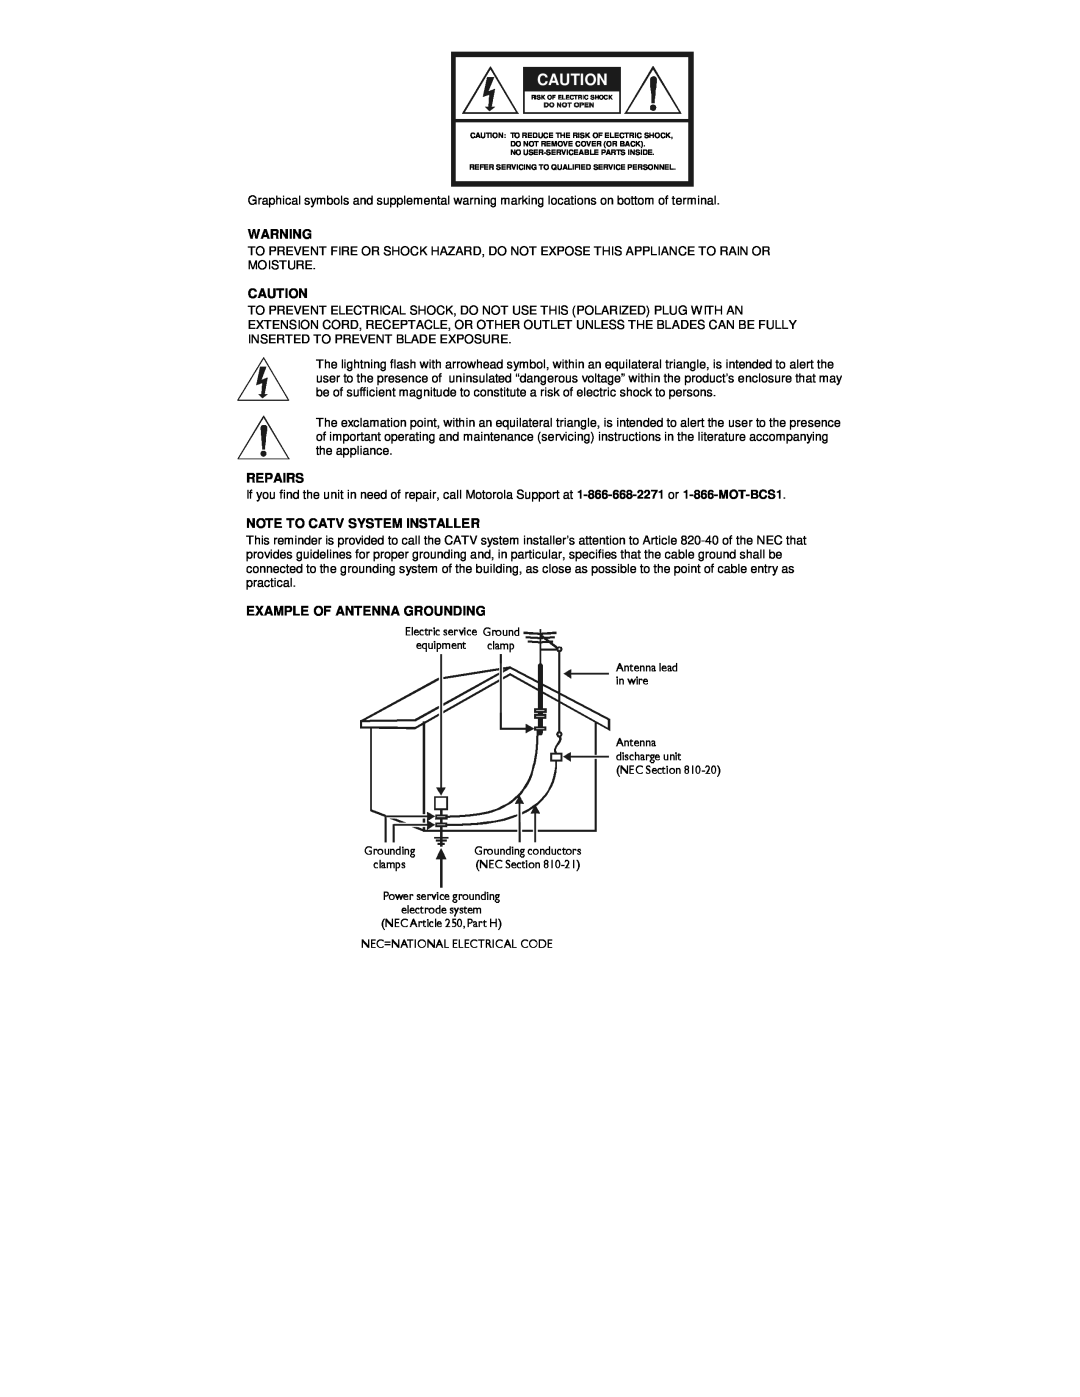 Motorola DCT6400 manual Repairs, Note To Catv System Installer, Example Of Antenna Grounding 